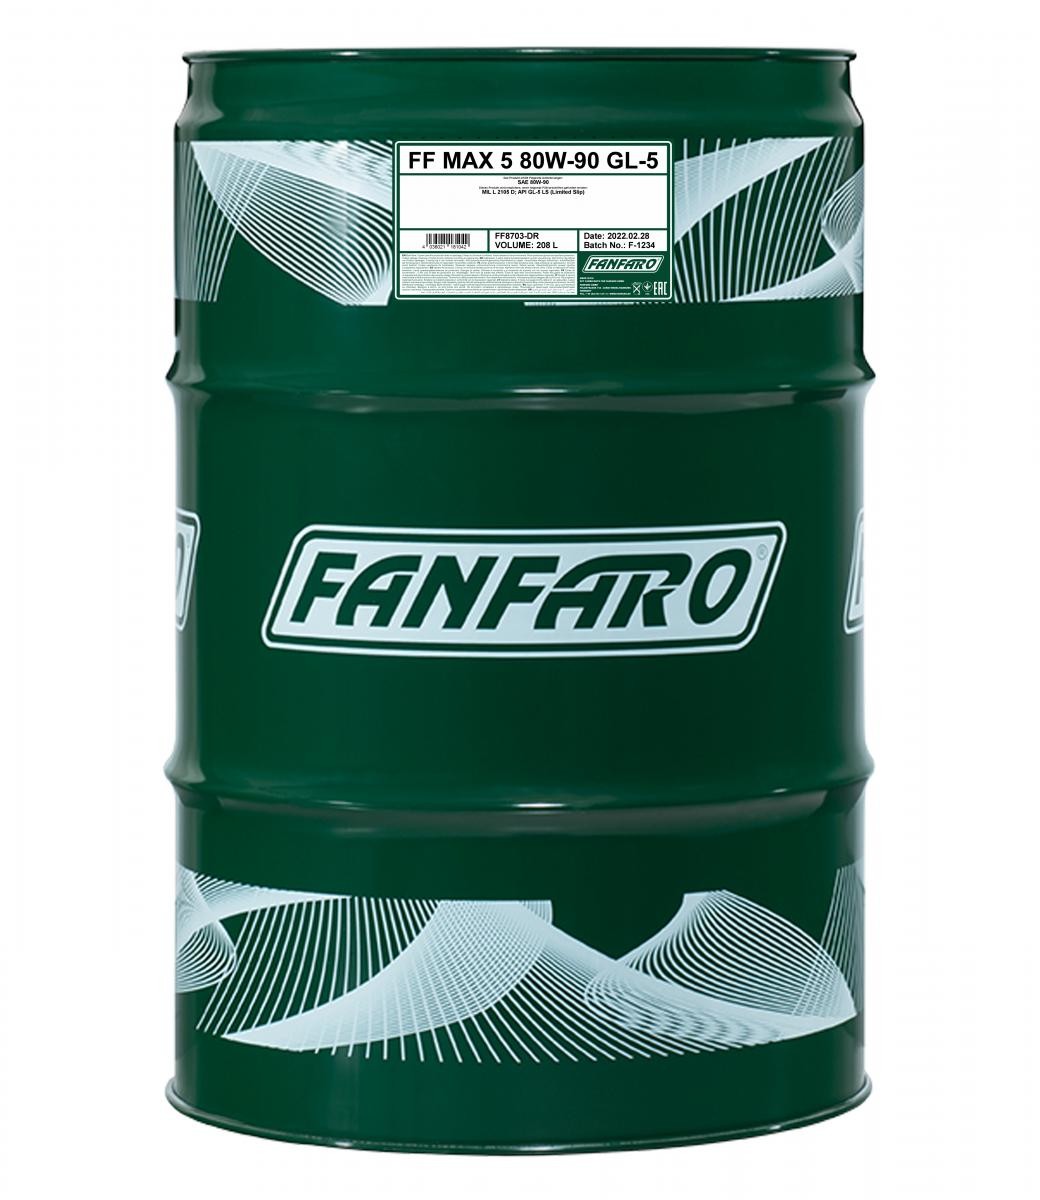 FANFARO MAX 5 Capacity: 208l, 80W-90 Manual Transmission Oil FF8703-DR buy